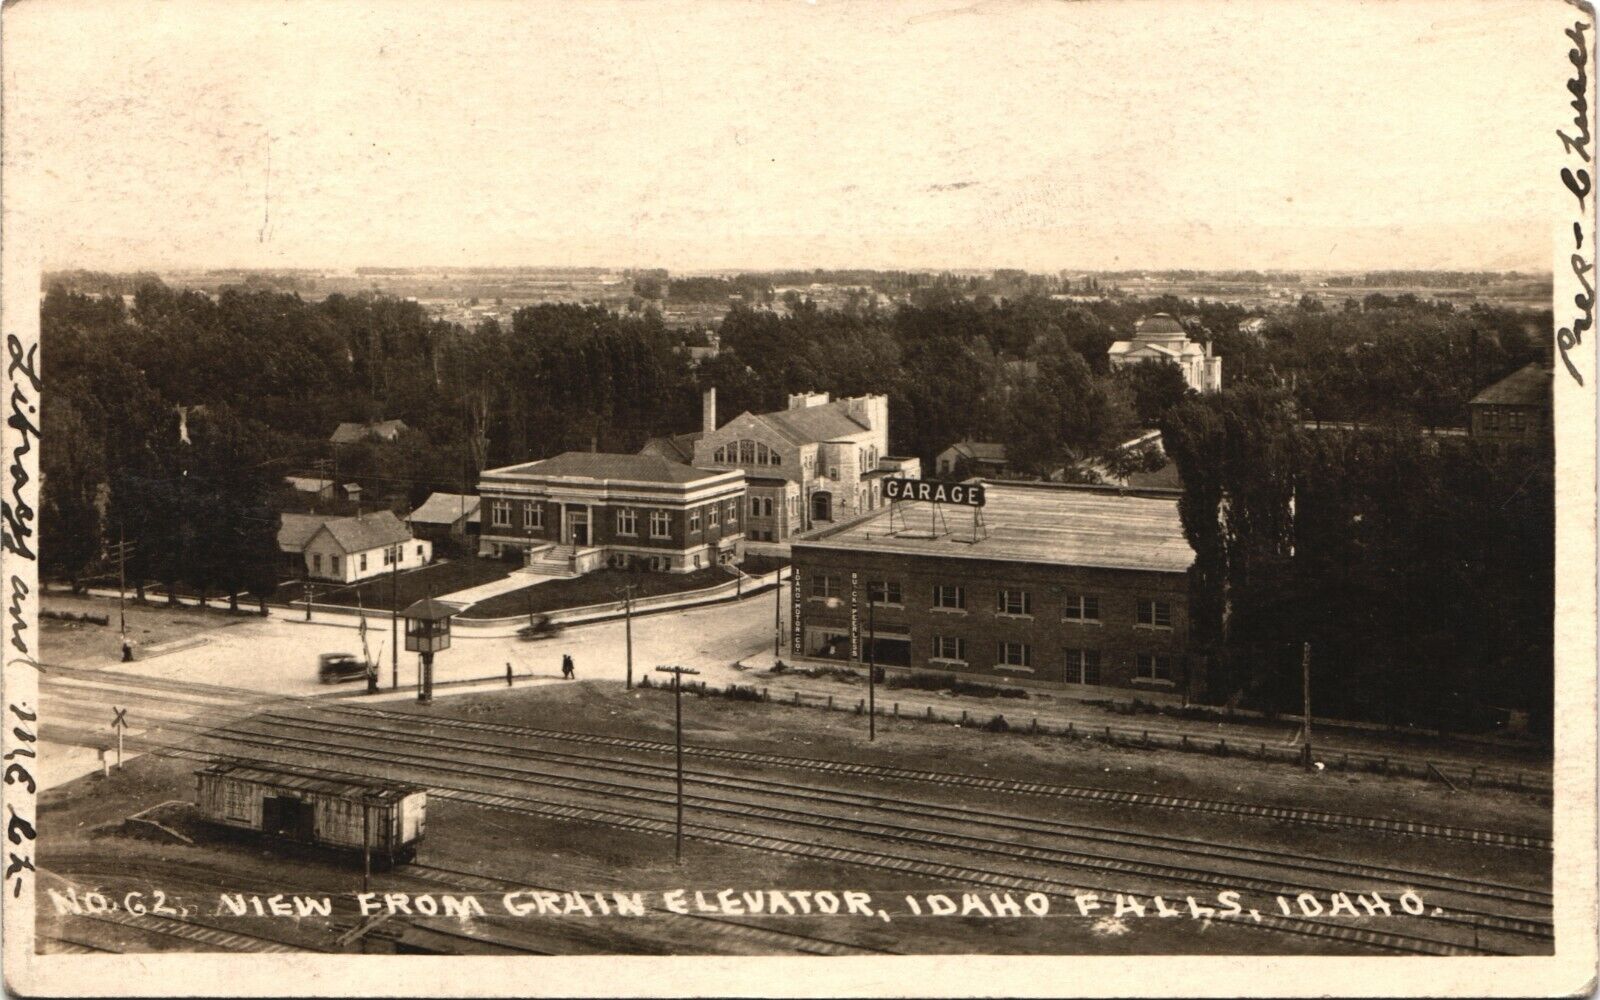 VIEW FROM GRAIN ELEVATOR antique real photo postcard rppc IDAHO FALLS, ID 1921